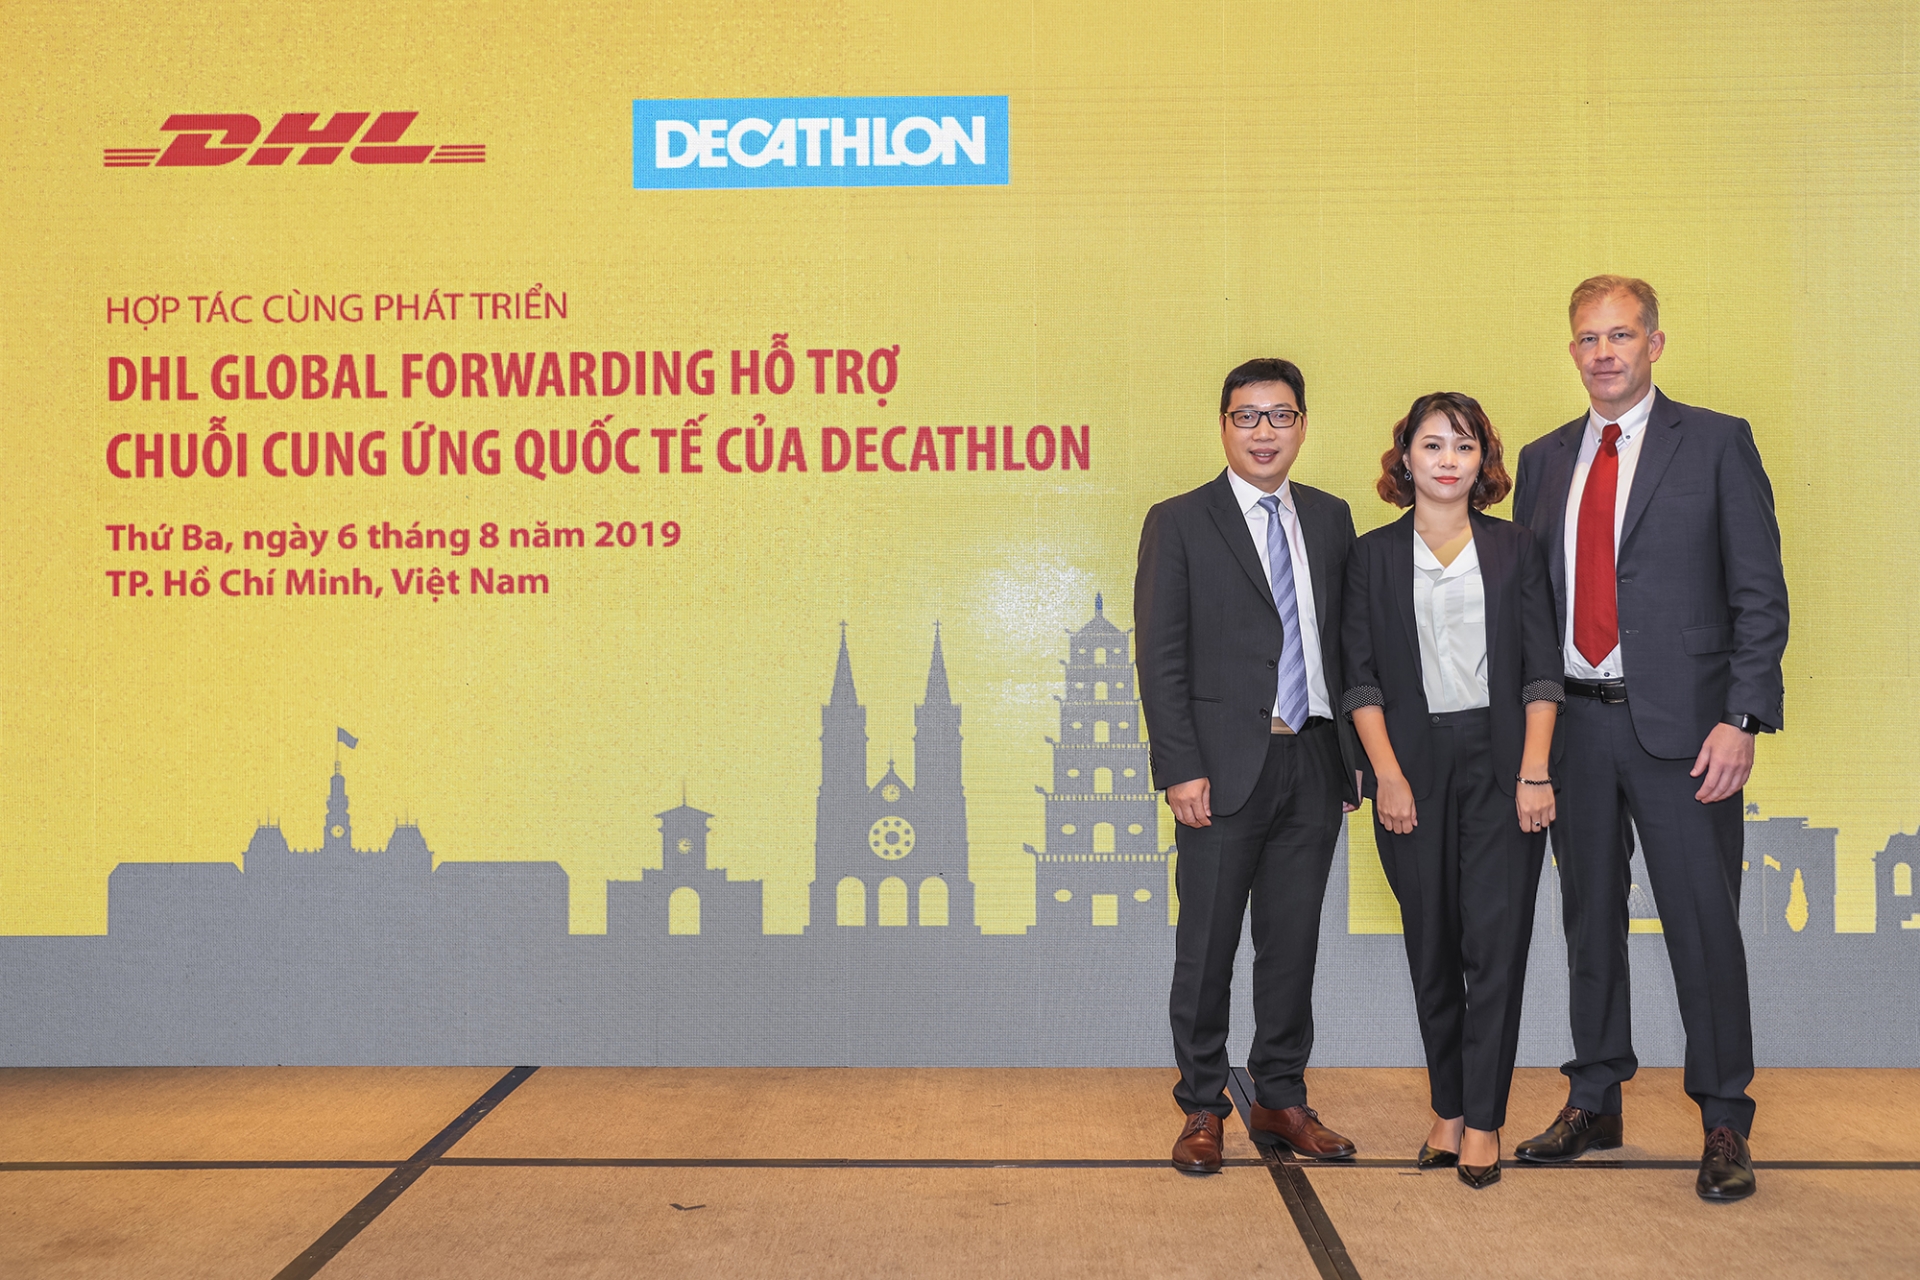 DHL Global Forwarding supports Decathlon’s international supply chain